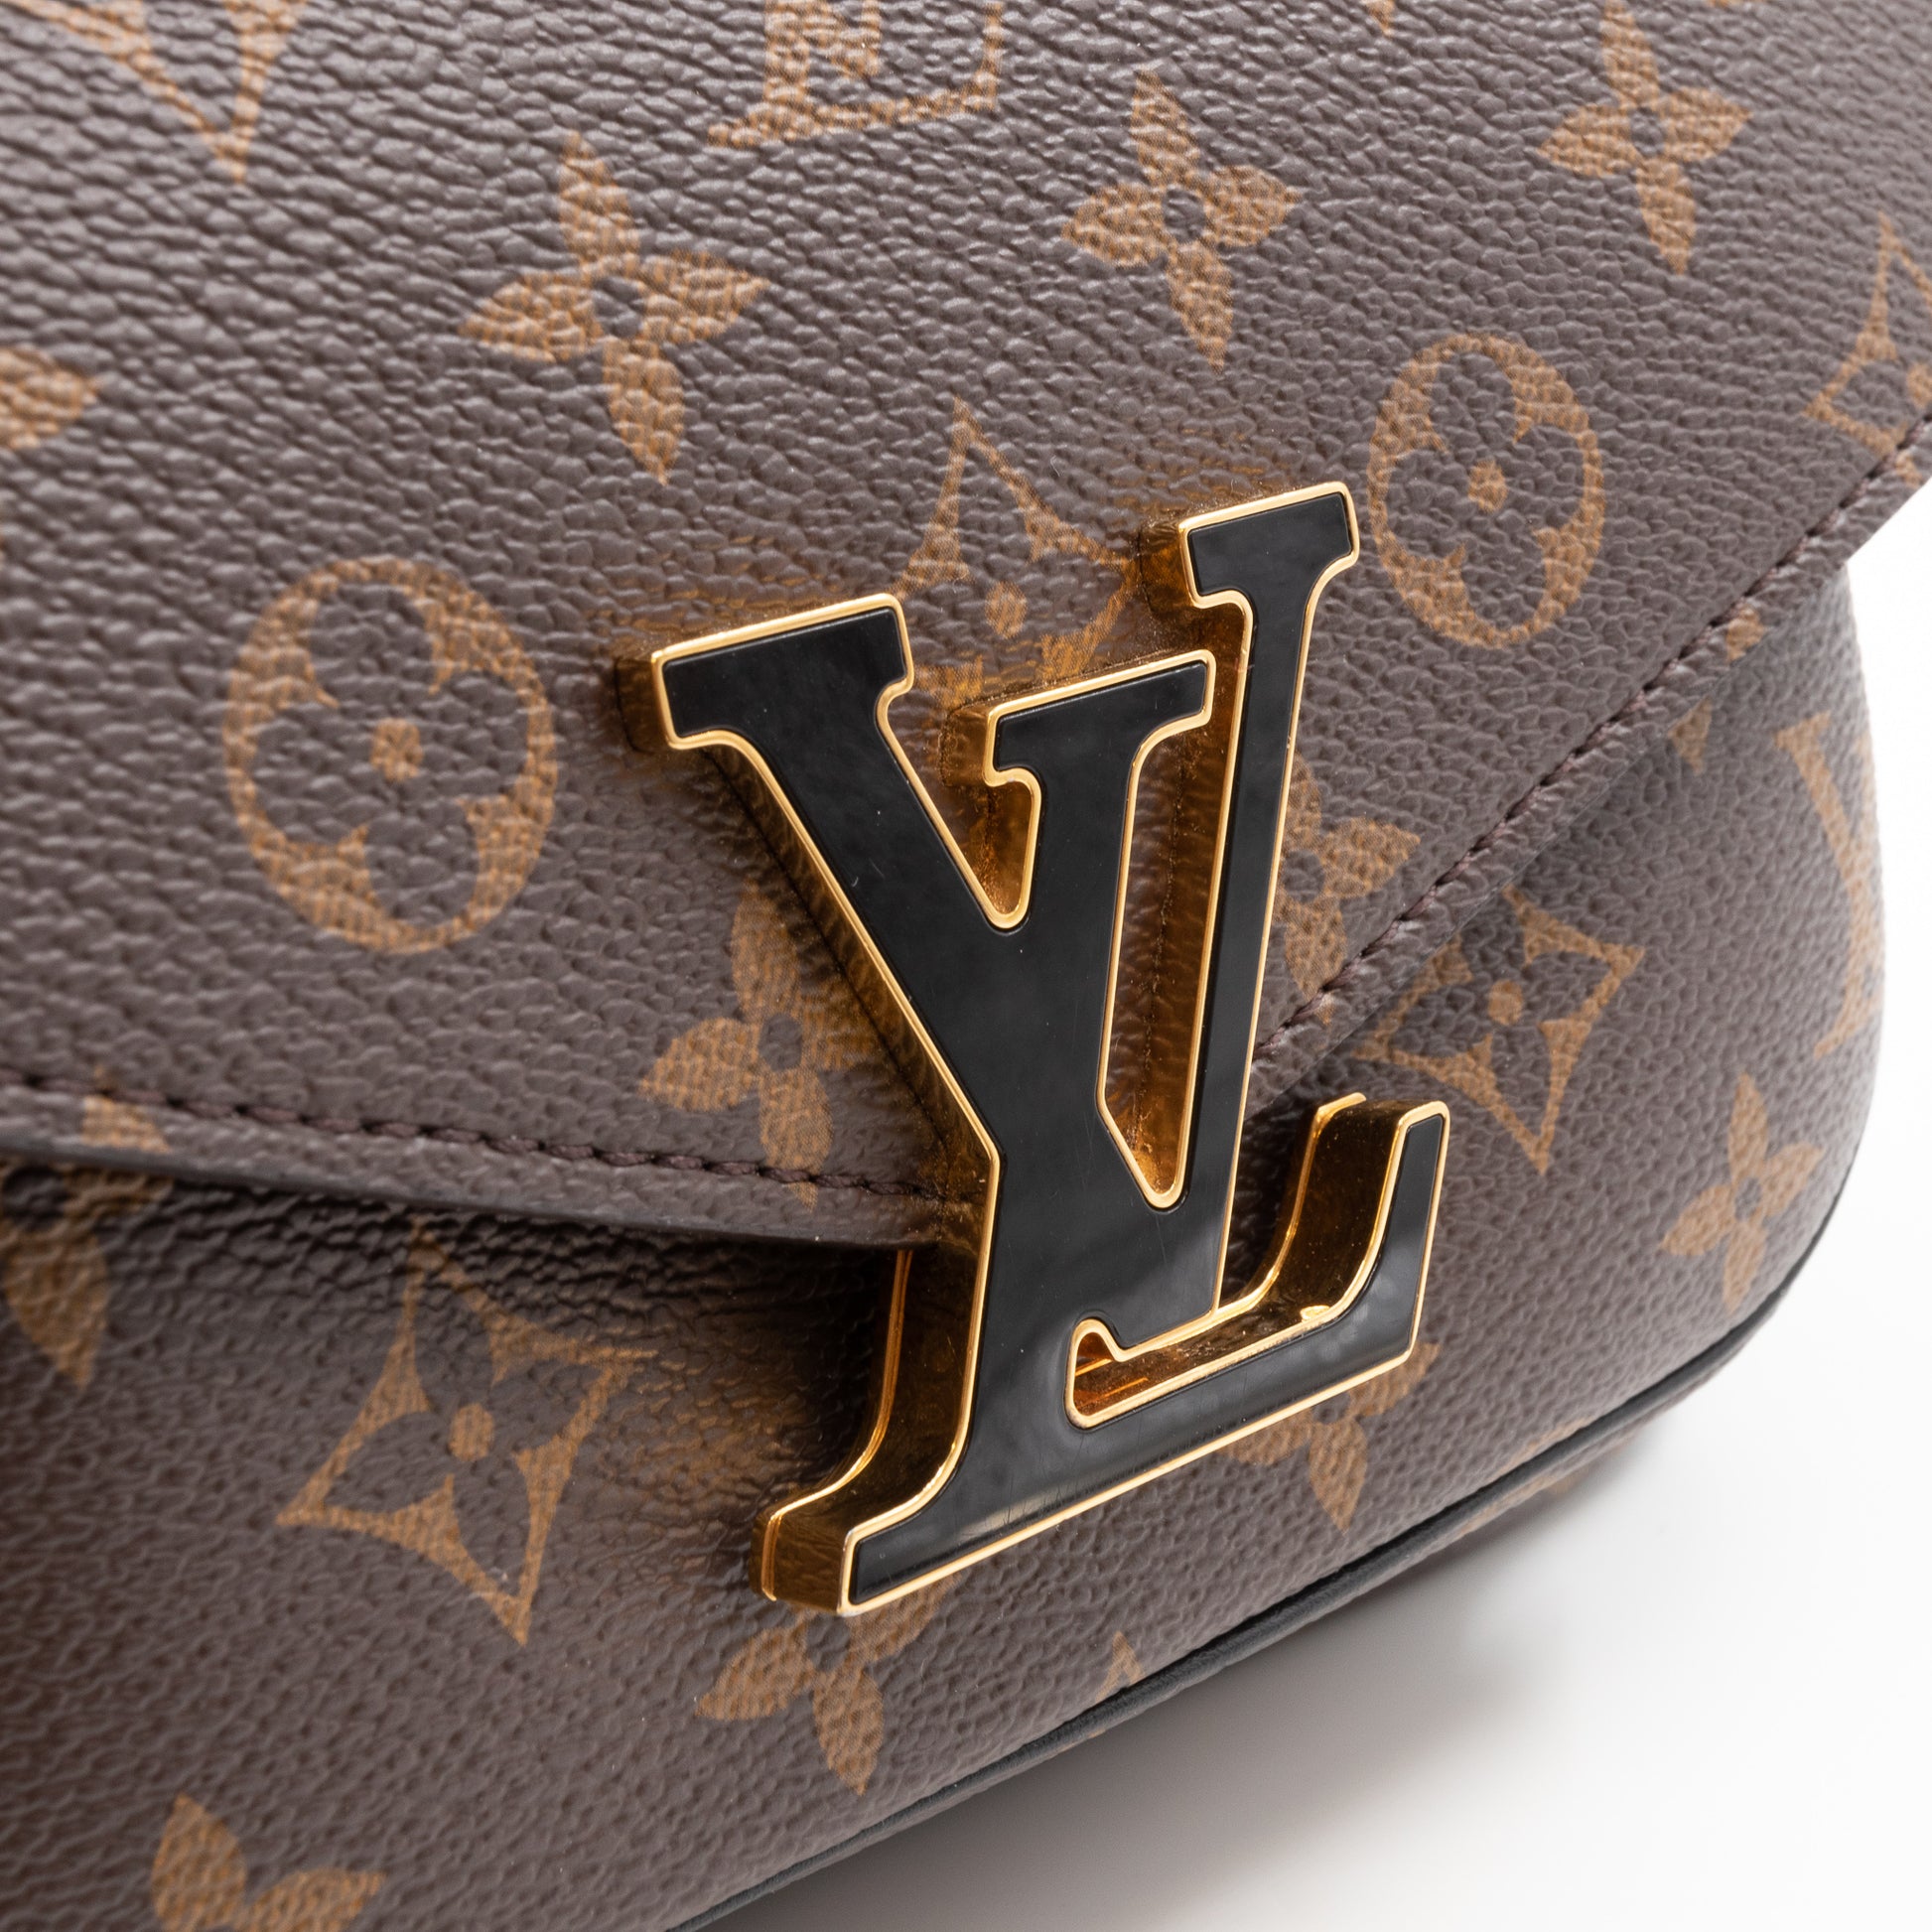 Louis Vuitton Passy Shoulder Bag M45592 Monogram brown 999596